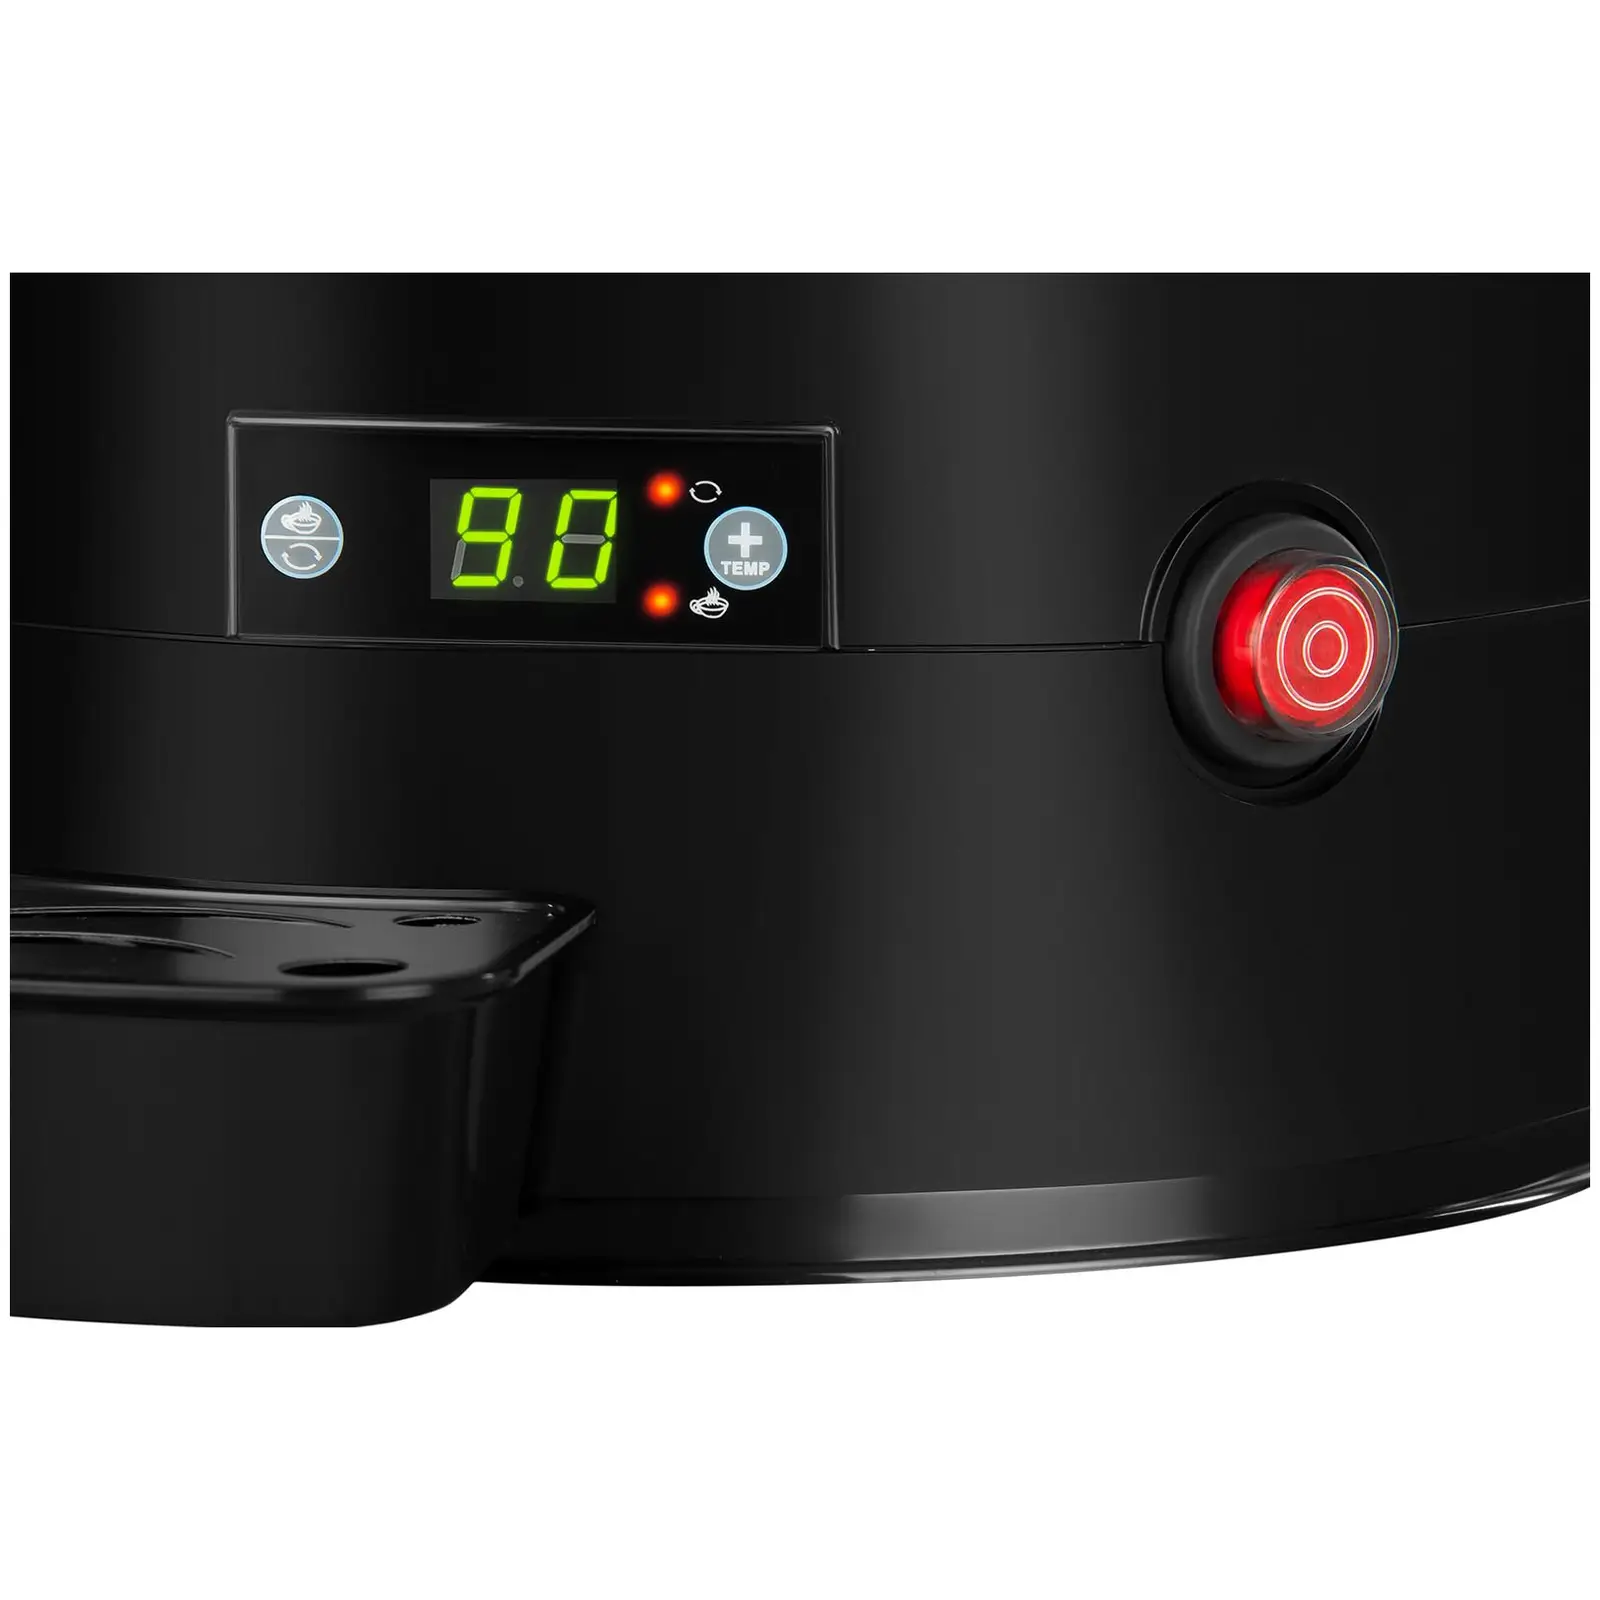 Hot Chocolate Machine - 10 Litres - LED Display